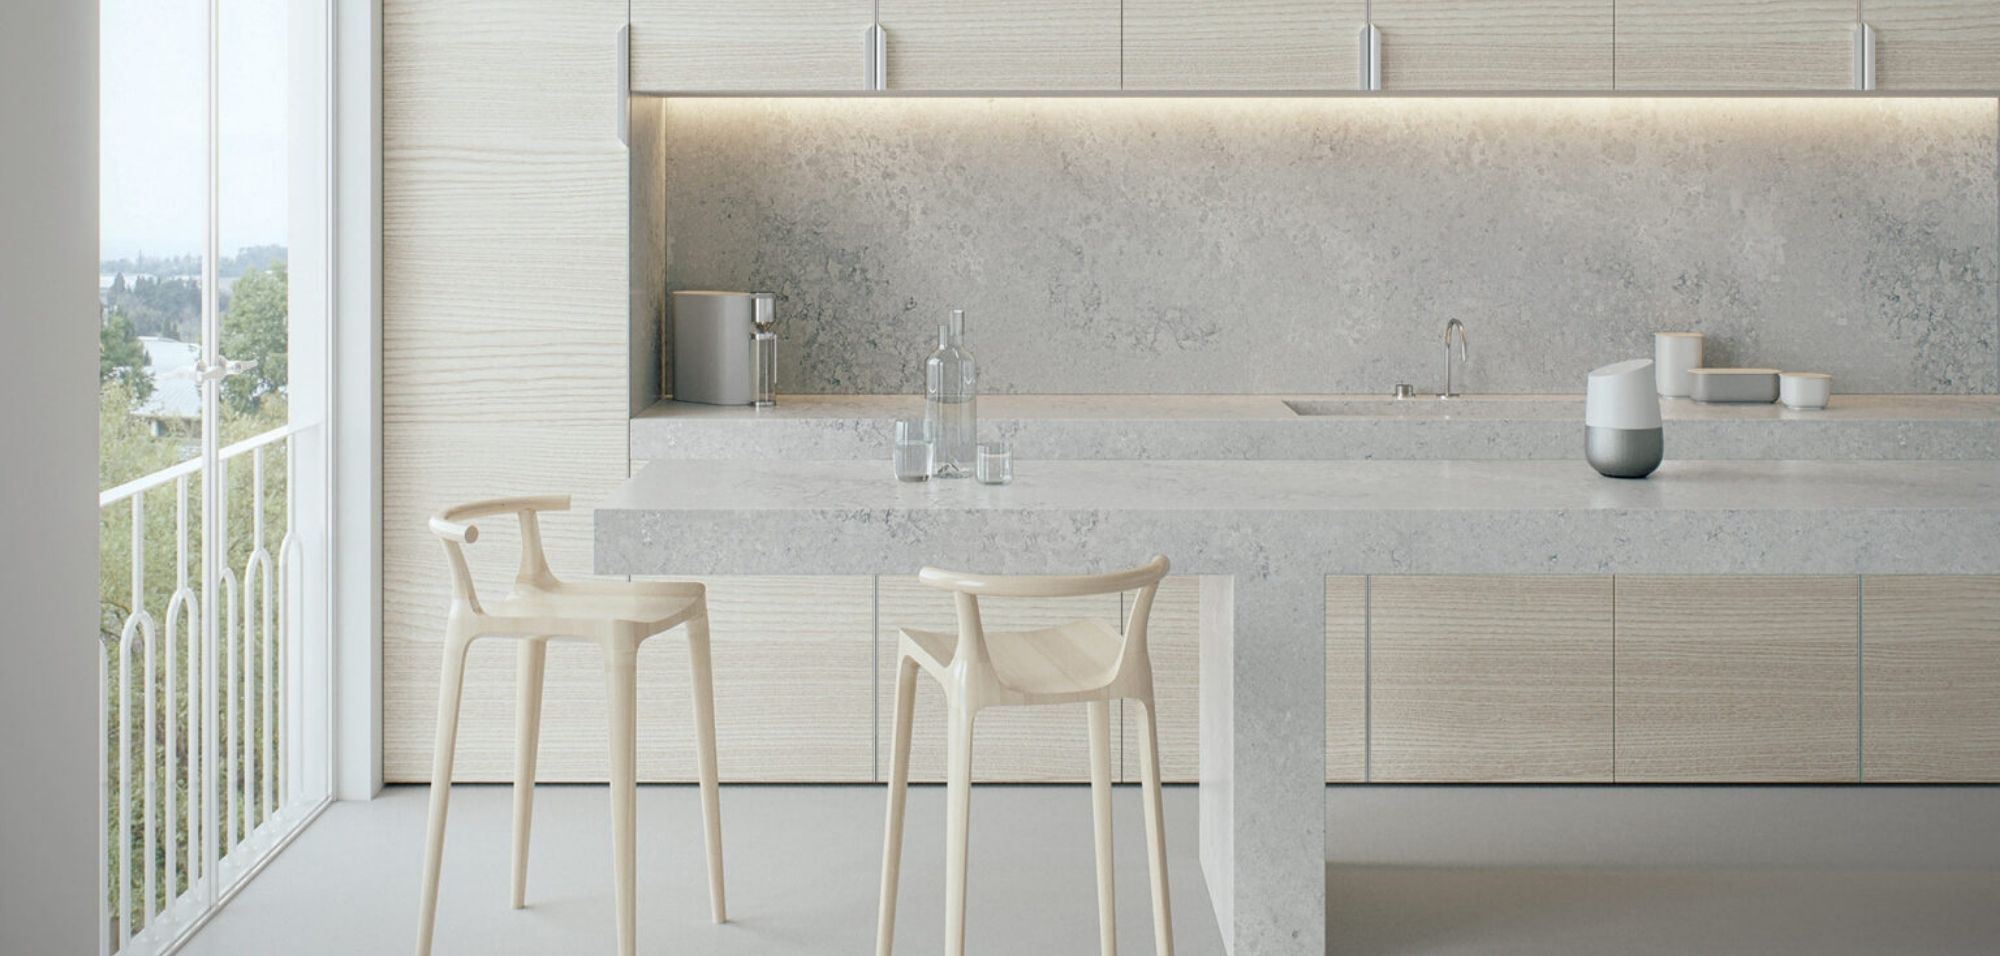 airy concrete caesarstone quartz kitchen countertops and full height backsplash